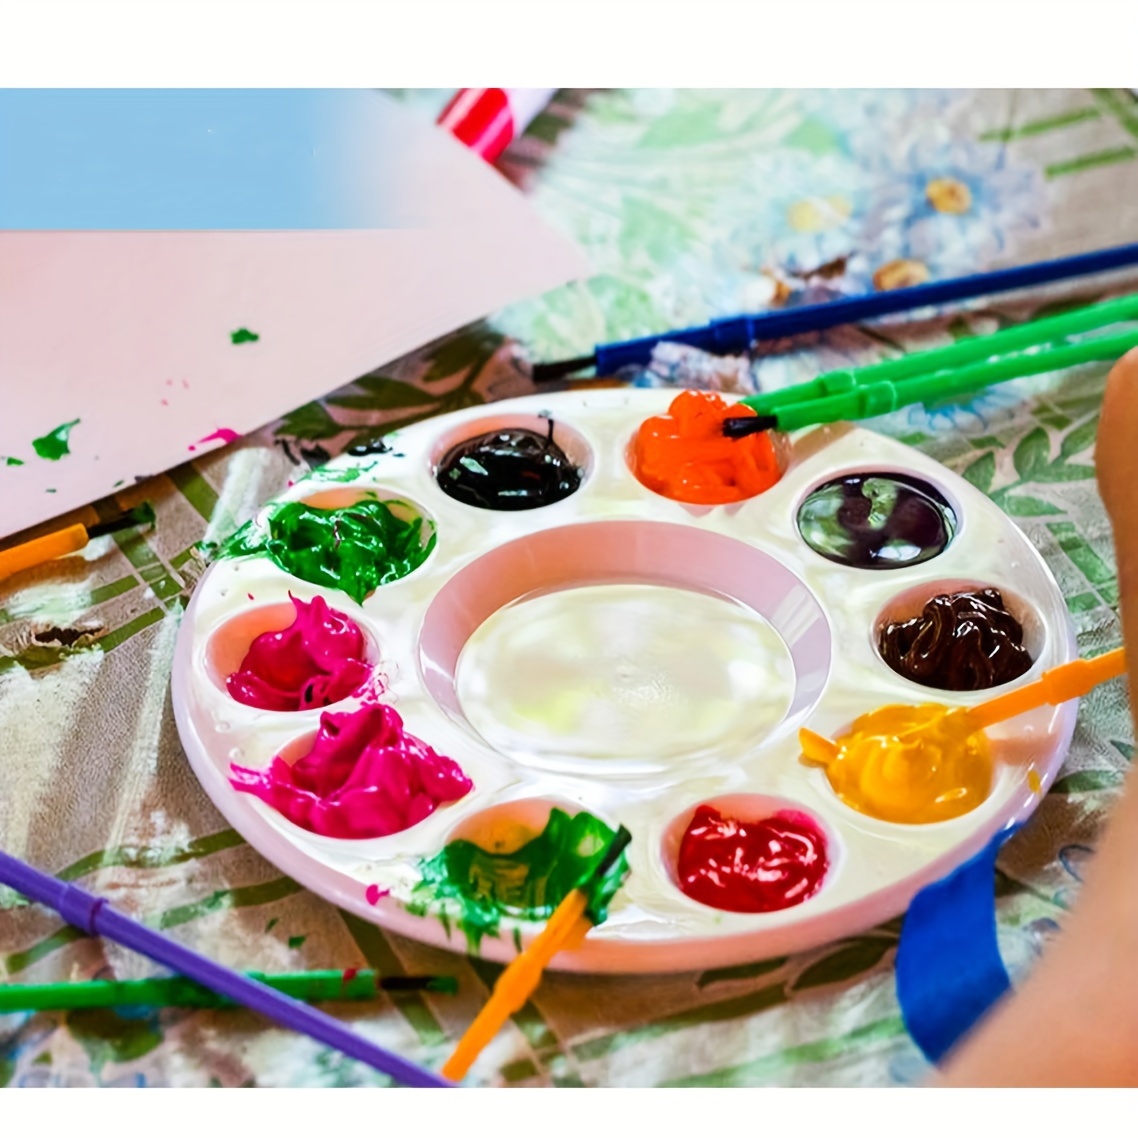 Gouache Paint Set Jelly Cup 24 Vibrant Colors Paints With Portable Case  Palette For Artist Canvas Painting Watercolor Papers, Rich Pigment, 30ml/Cup